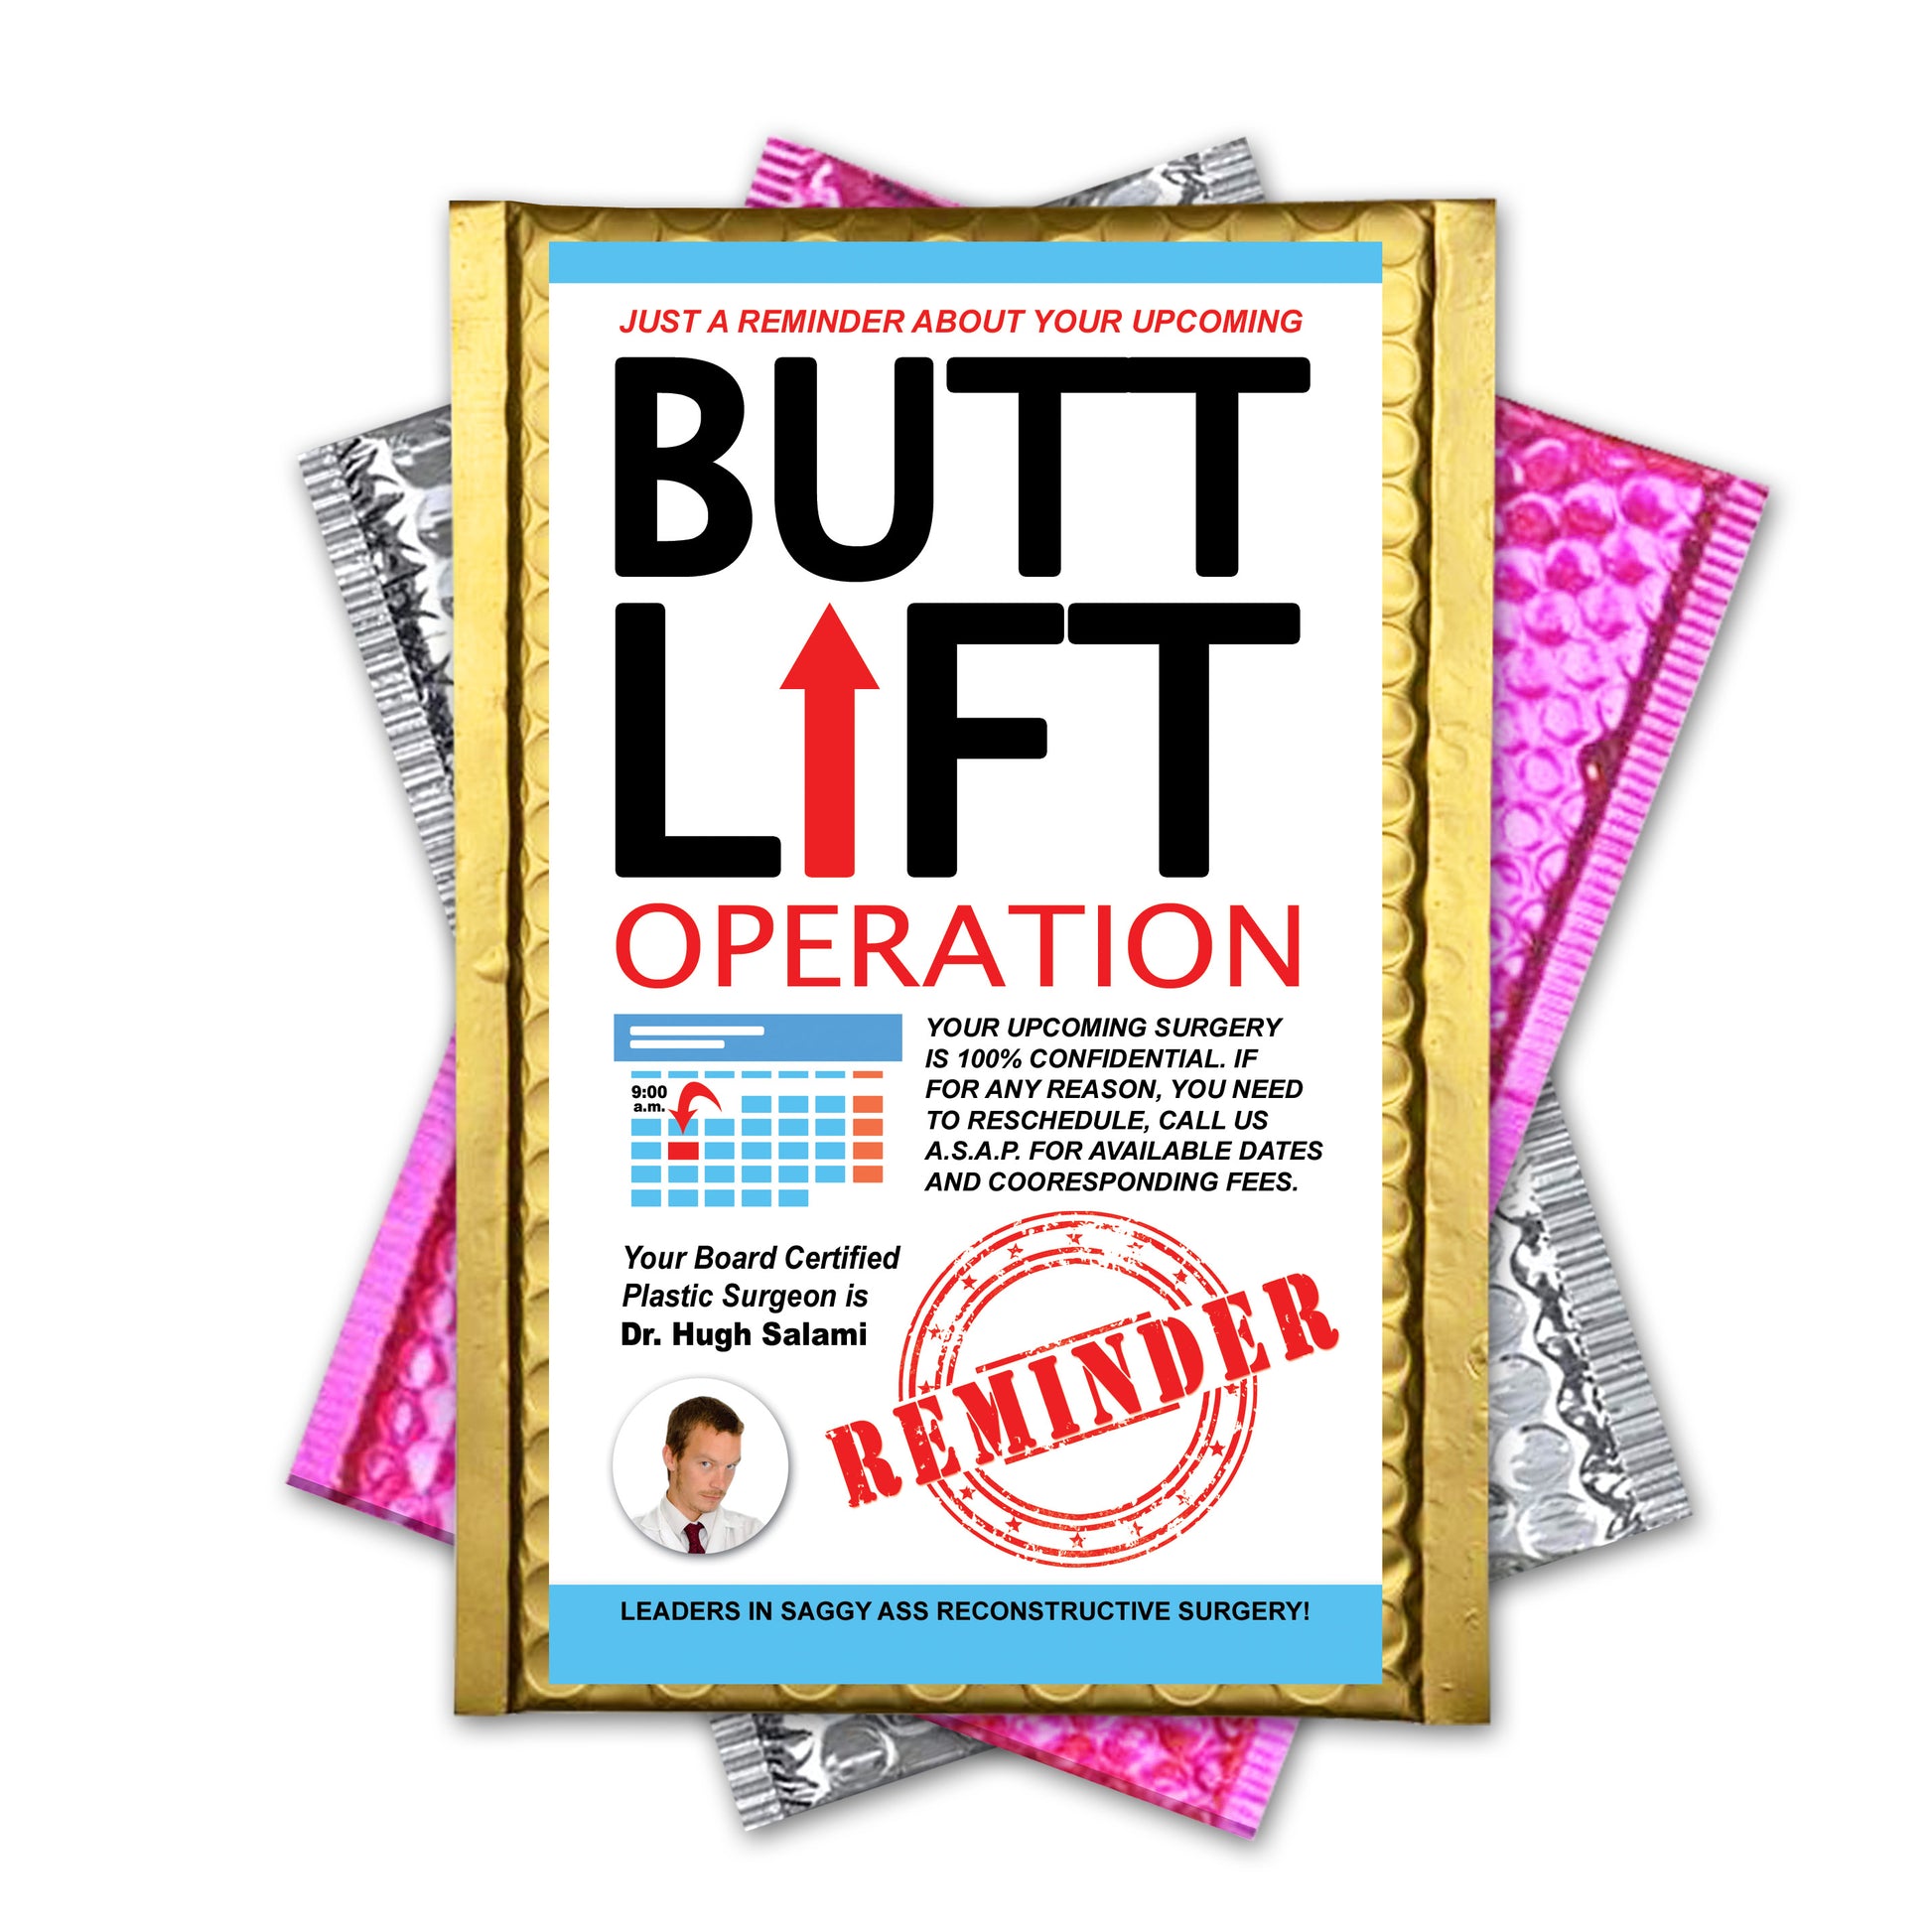 Butt Lift Operation embarrassing prank envelope